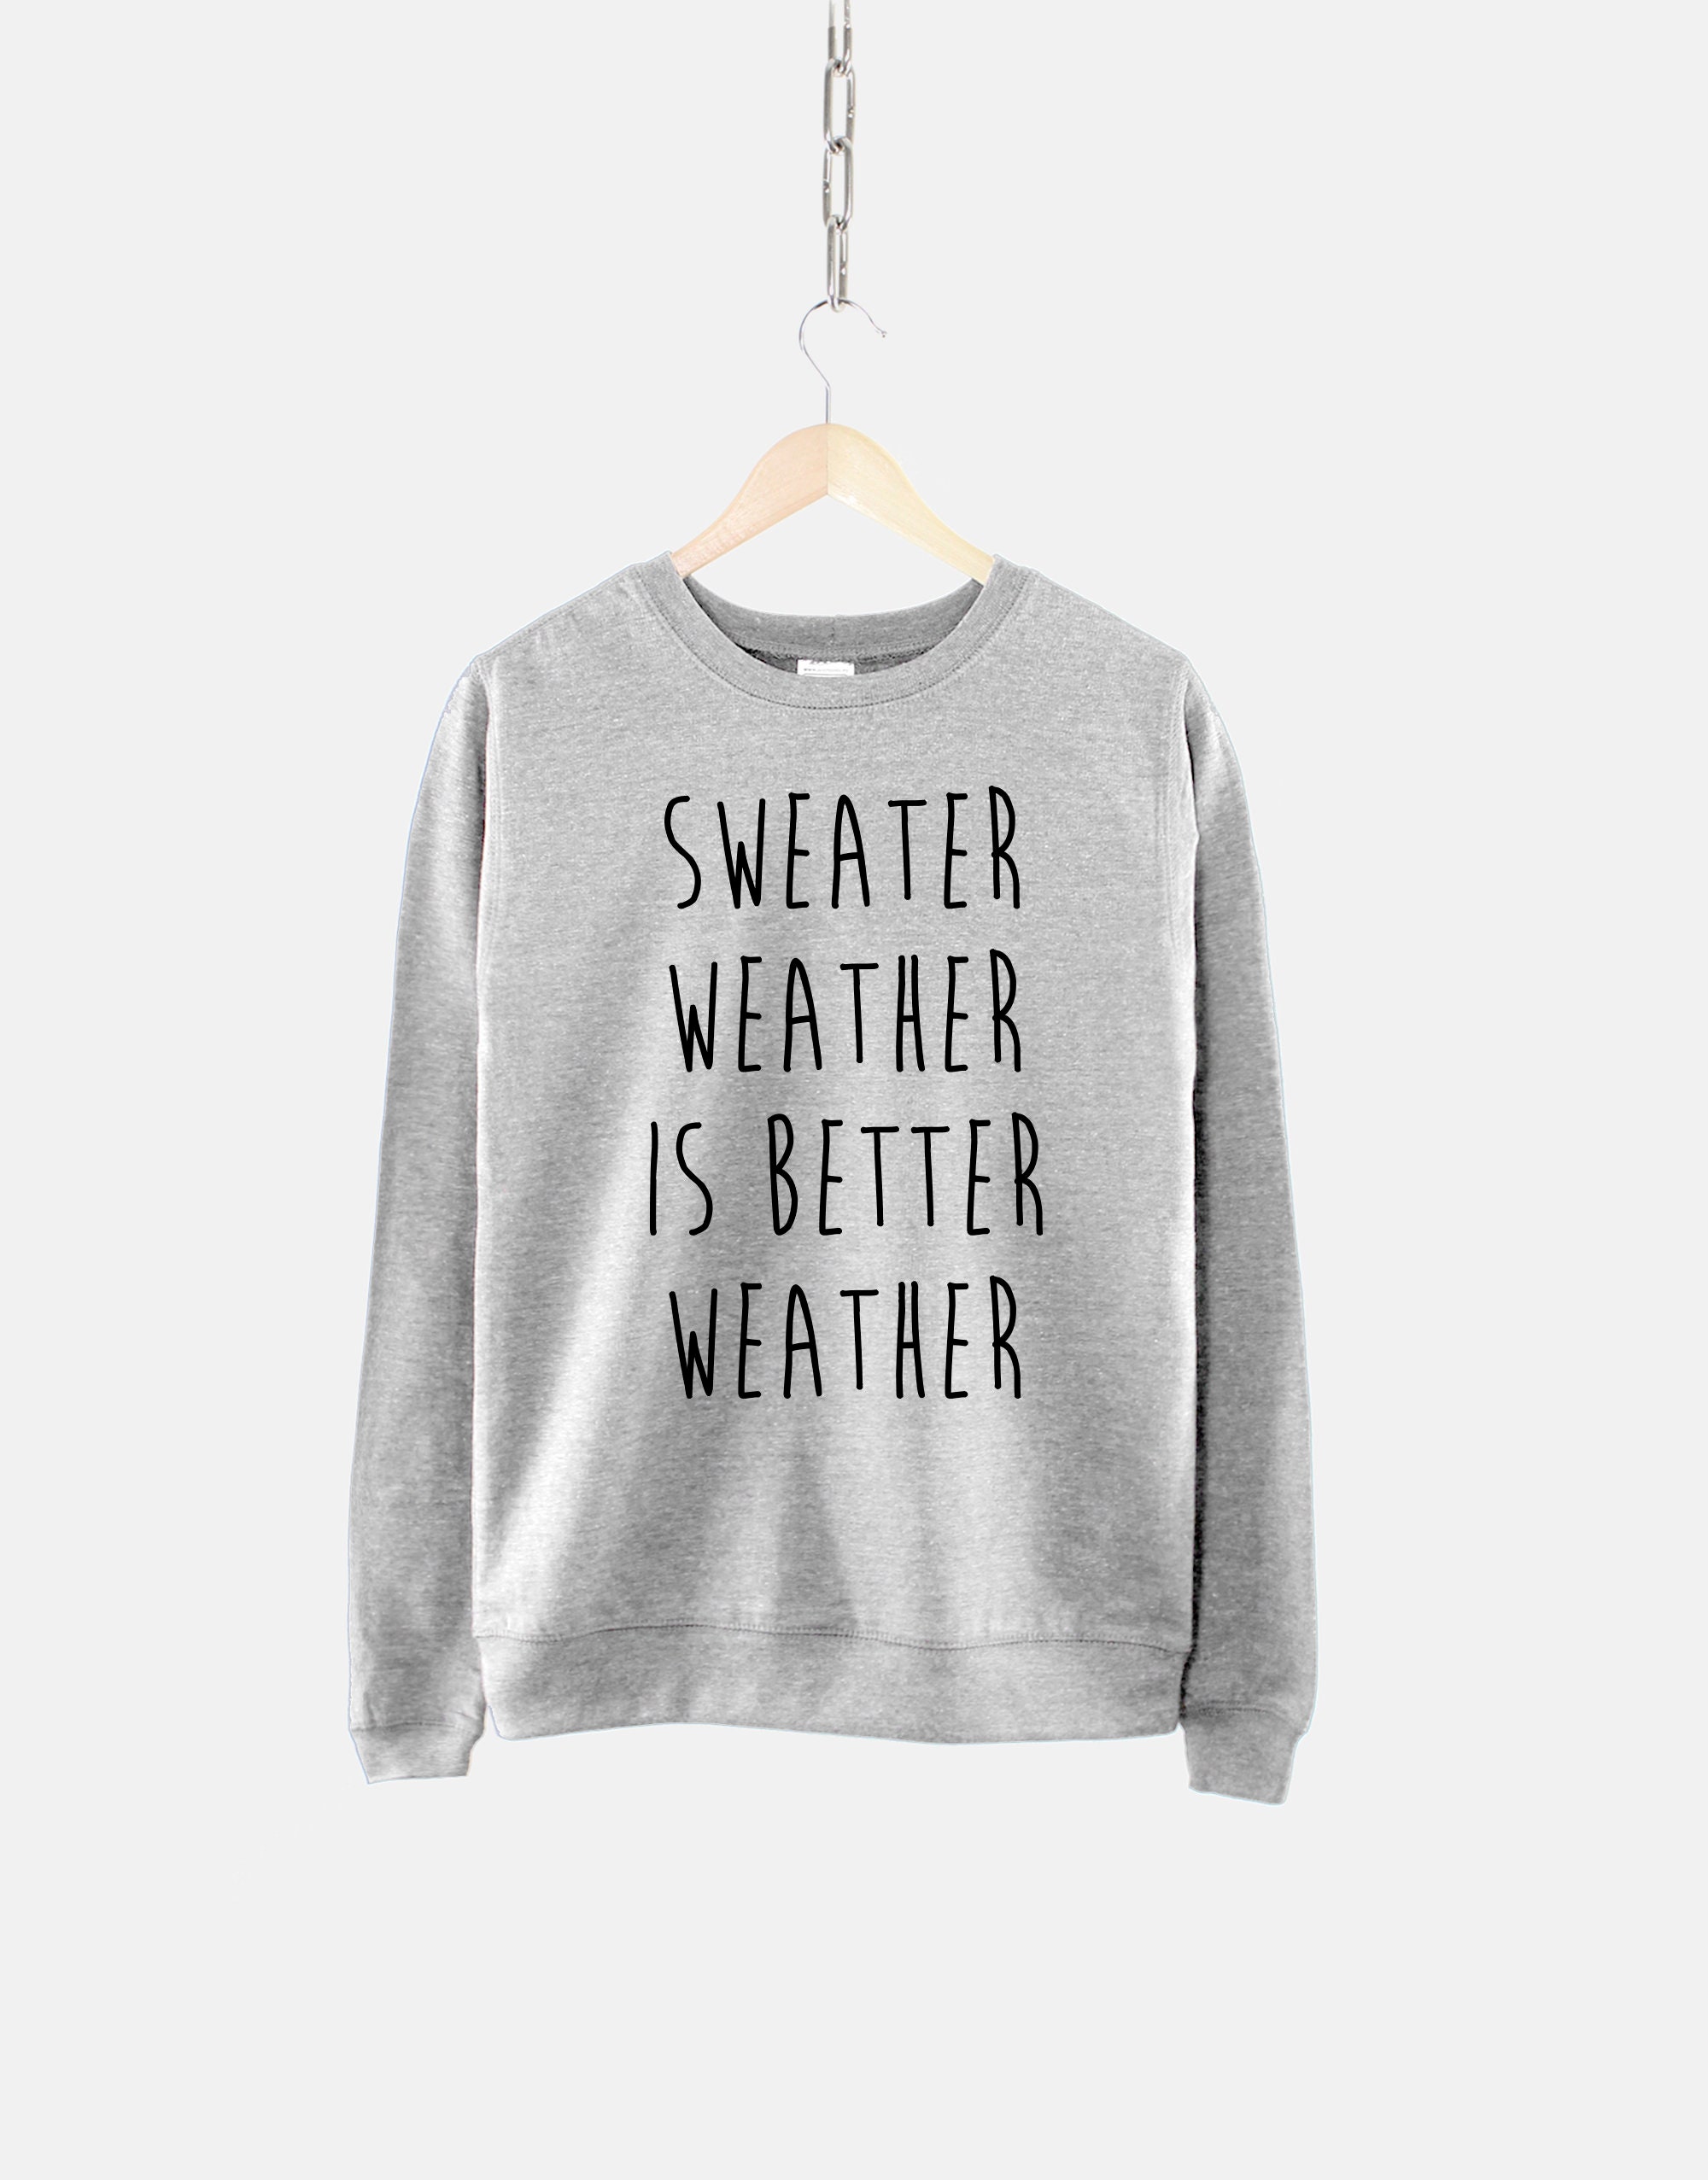 Sweater Weather is Better Weather Crew Neck Sweatshirt - Etsy UK